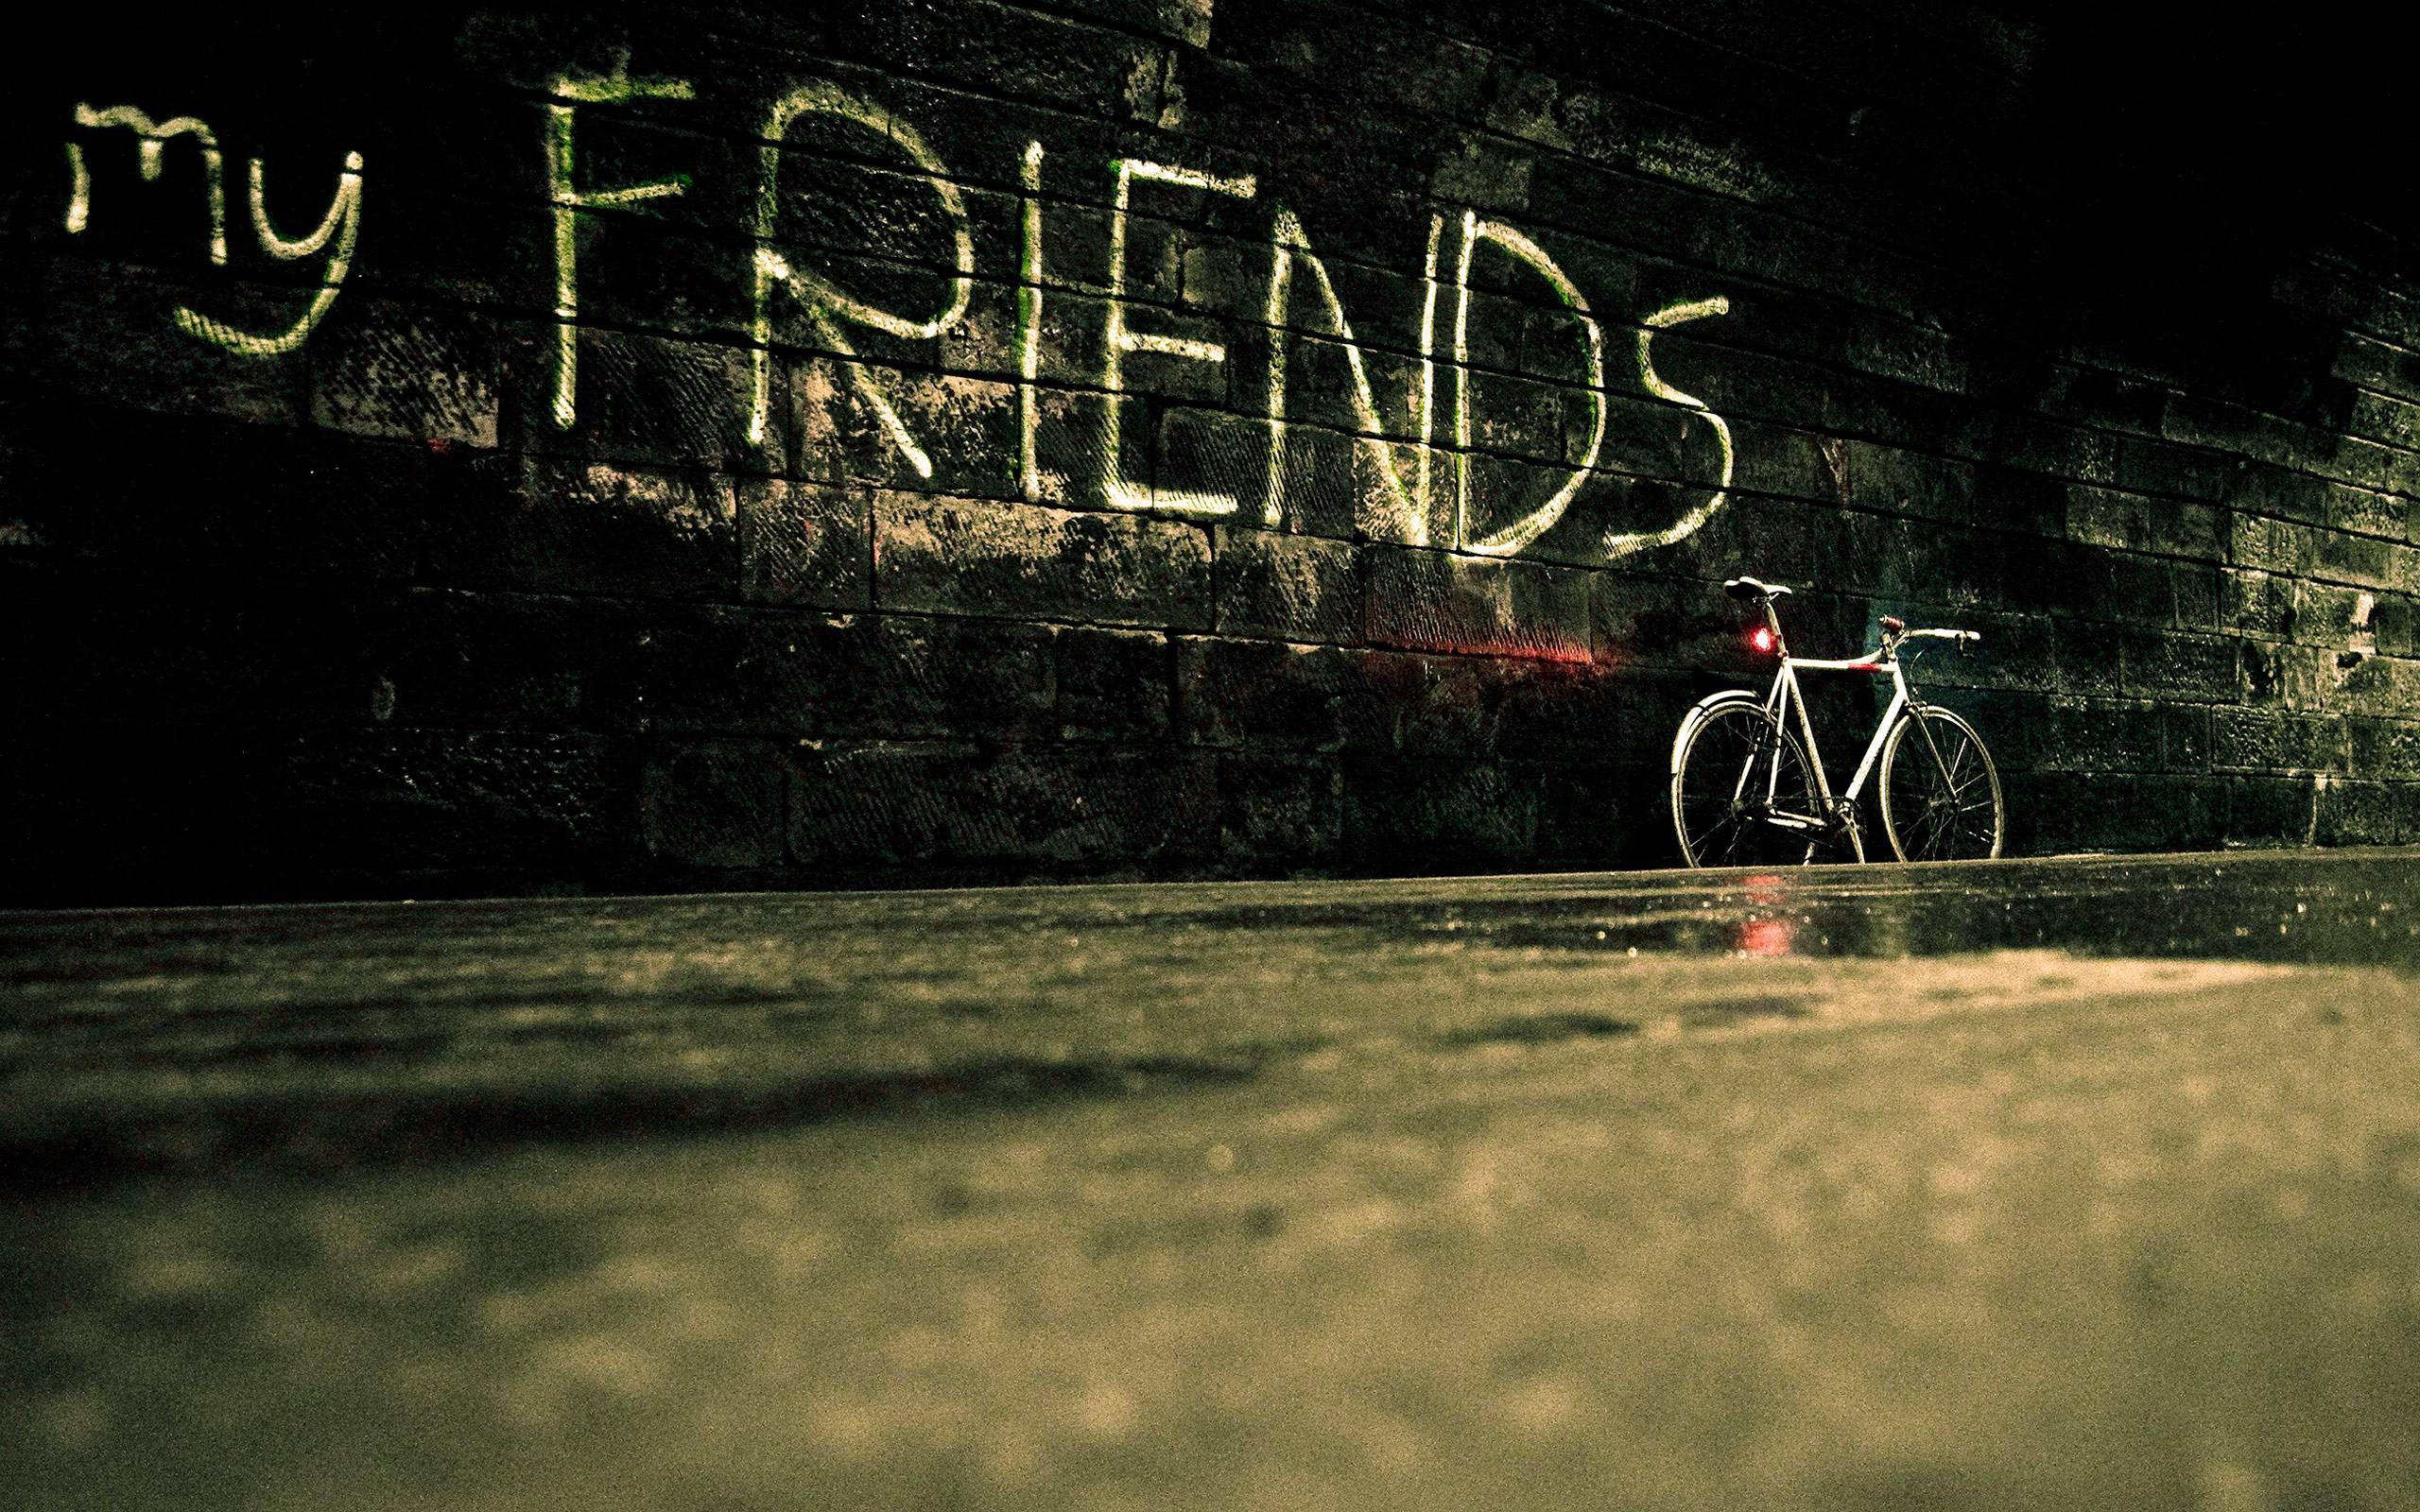 Friendship be like. Best friends фон. My friends картинки. My best friend фон. Дружеские обои.